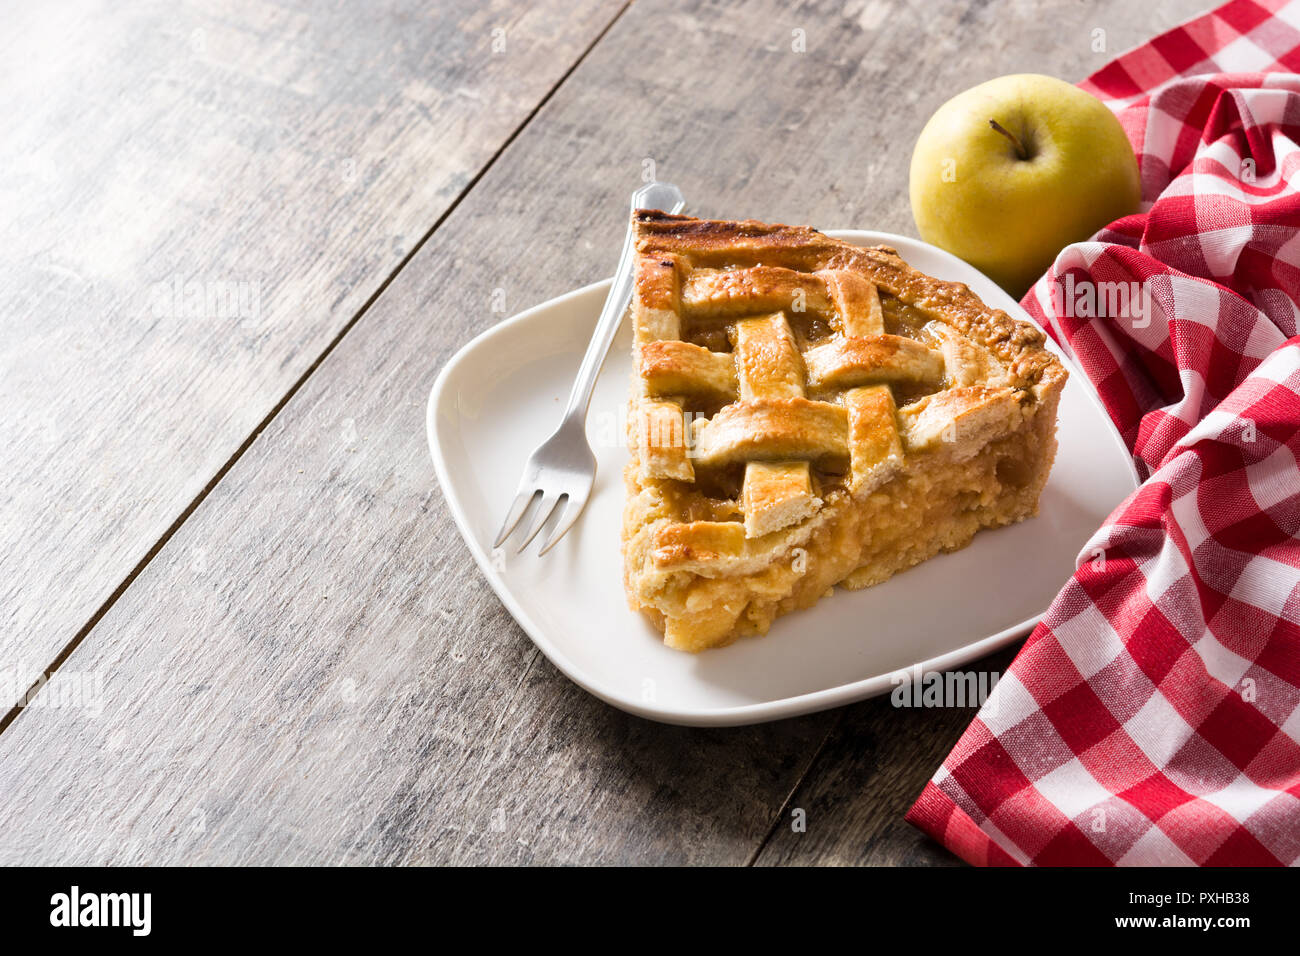 Homemade apple pie slice on wooden table. Copyspace Stock Photo